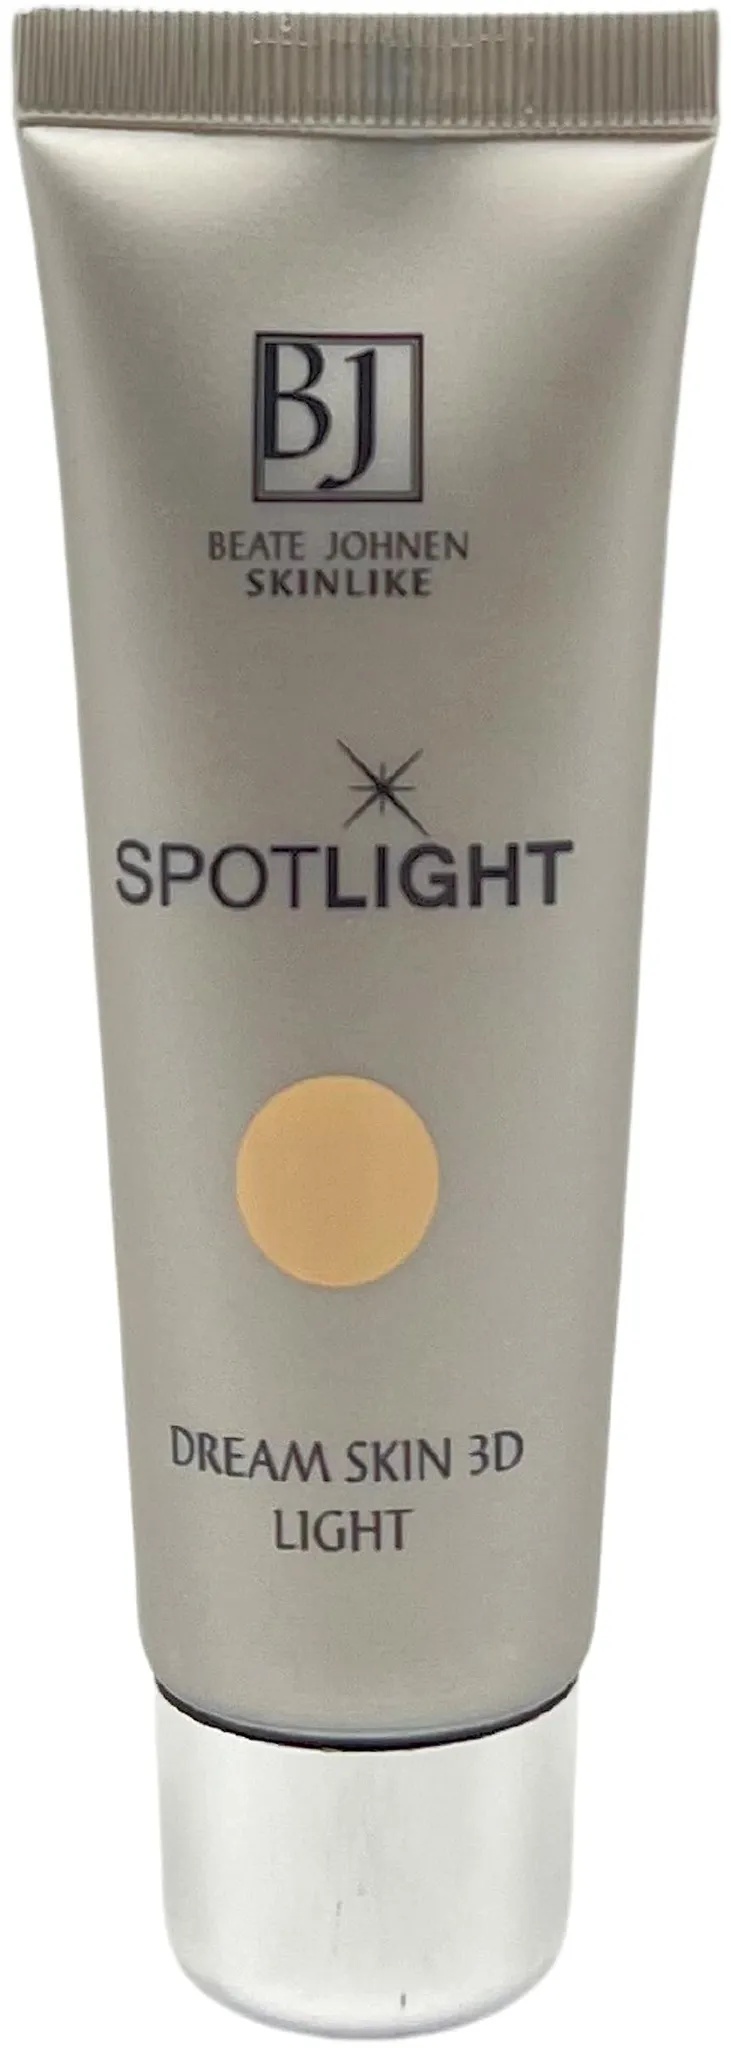 Beate Johnen Skinlike SPOTLIGHT - Dream Skin 3D LIGHT 30ml - Passt sich der Hautfarbe an · Verleiht einen optisch perfektionierten Teint